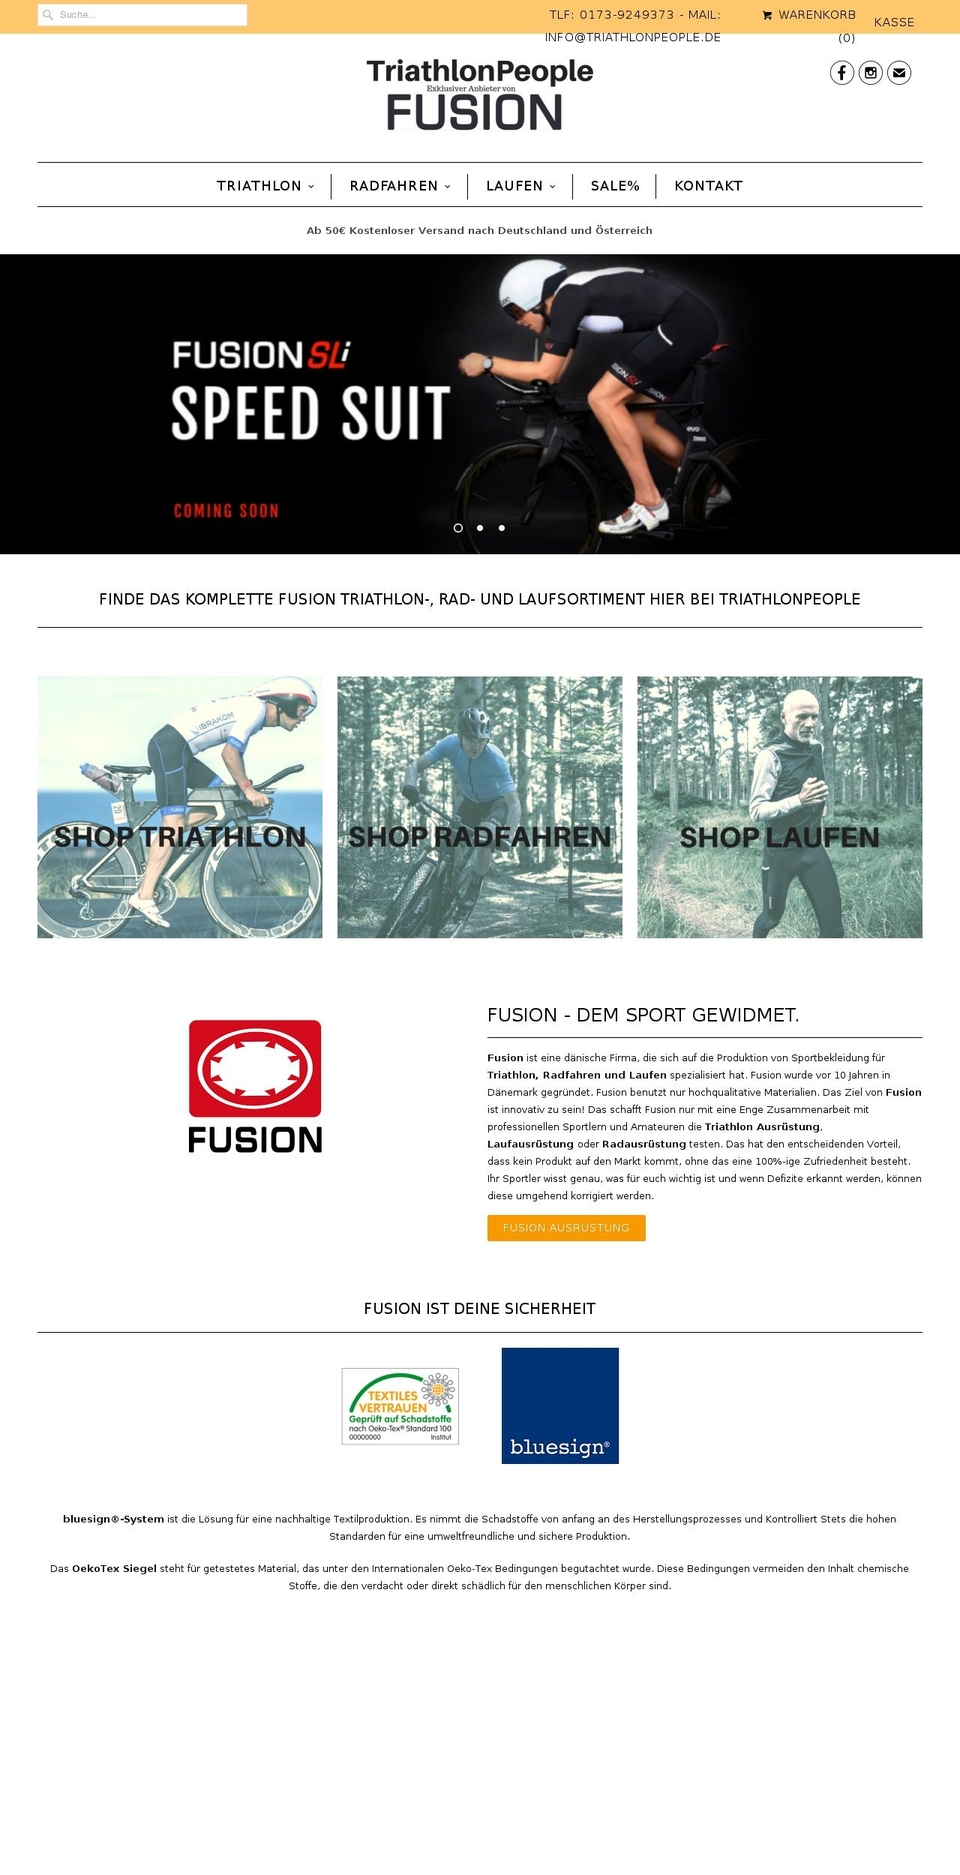 triathlon-people.de shopify website screenshot